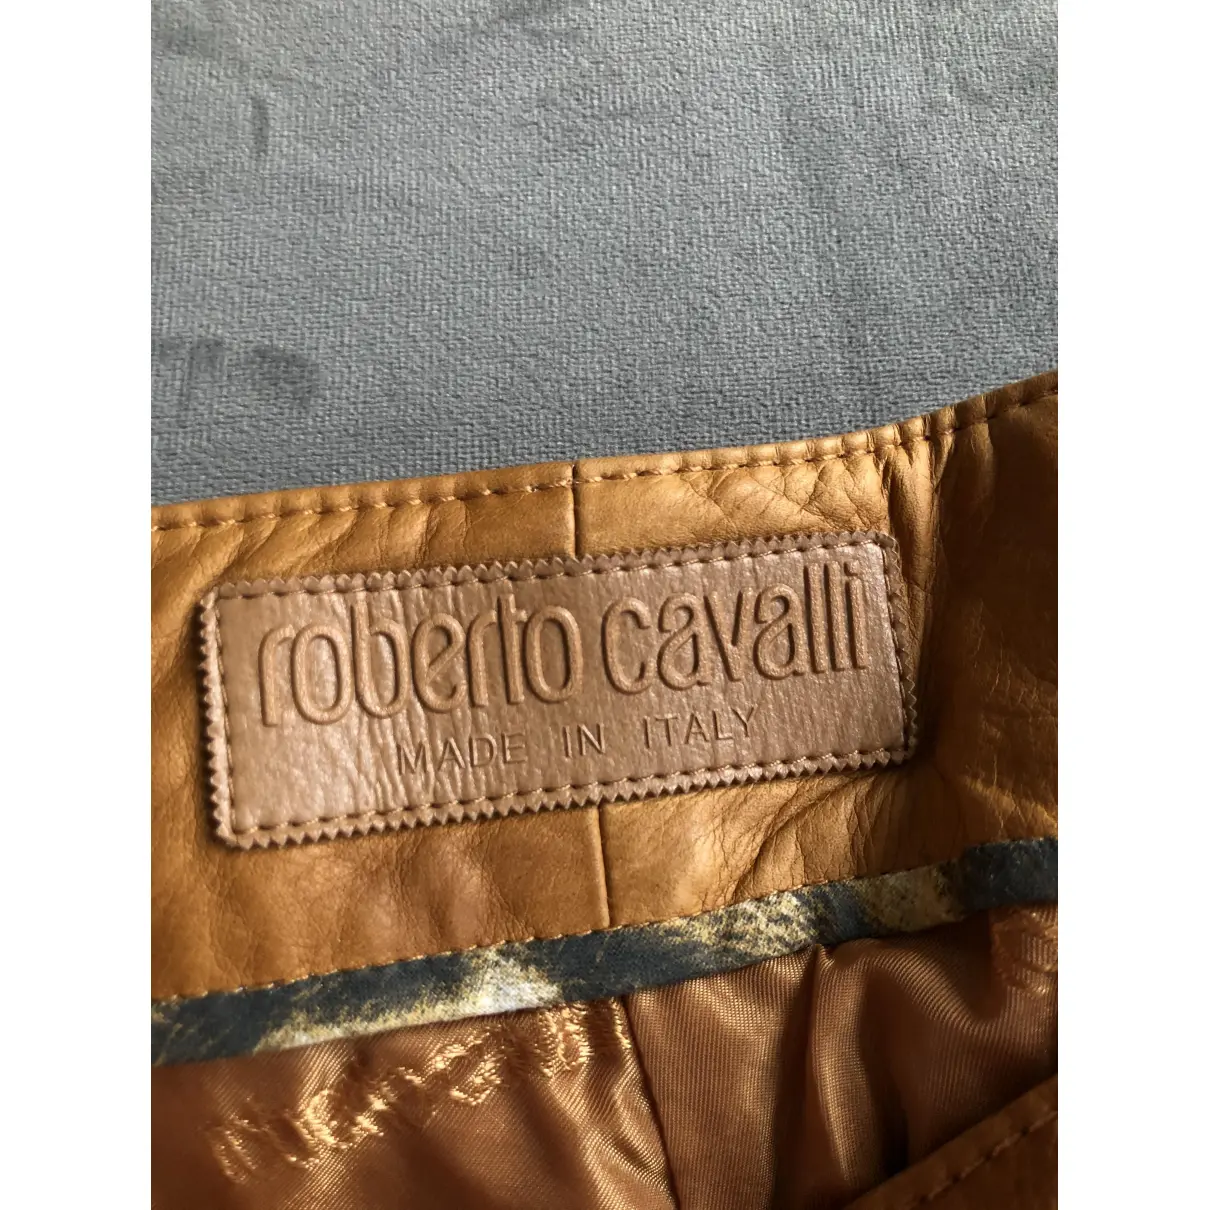 Leather trousers Roberto Cavalli